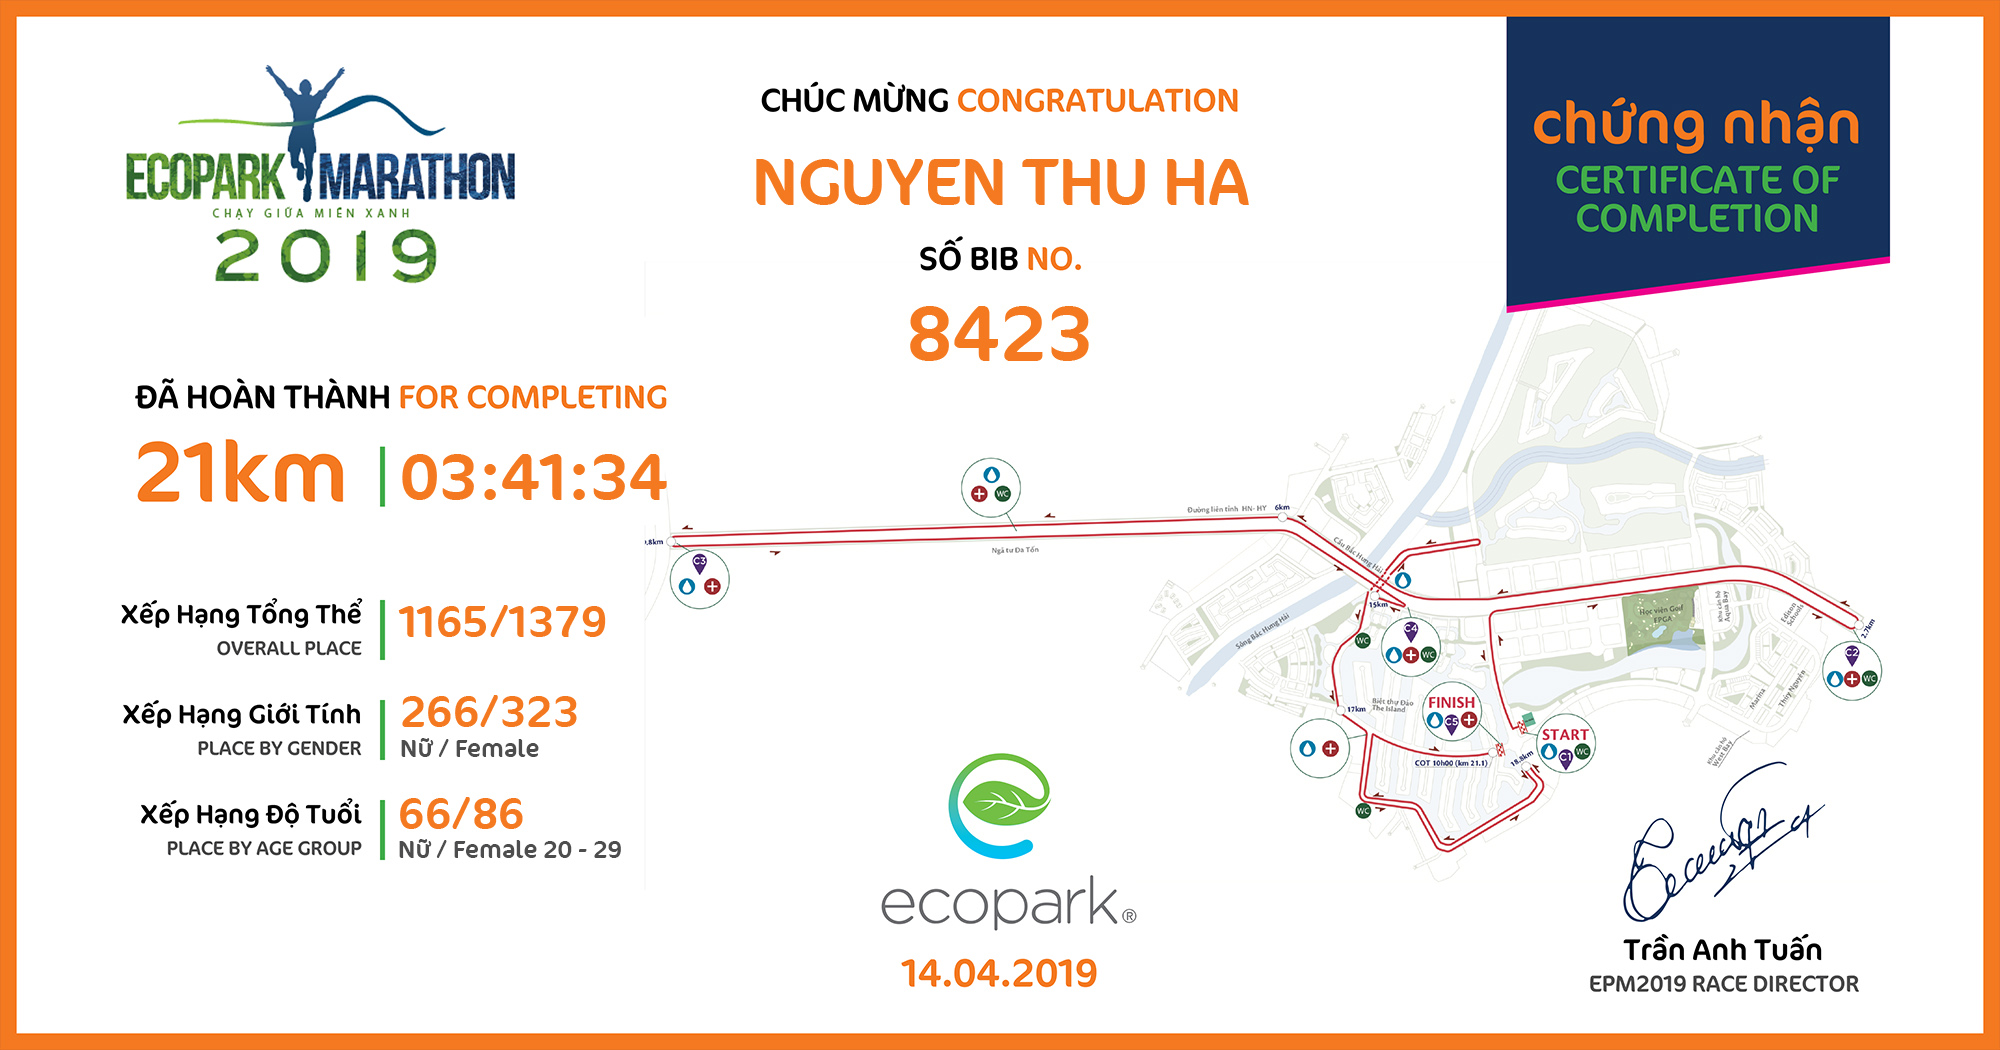 8423 - Nguyen Thu Ha